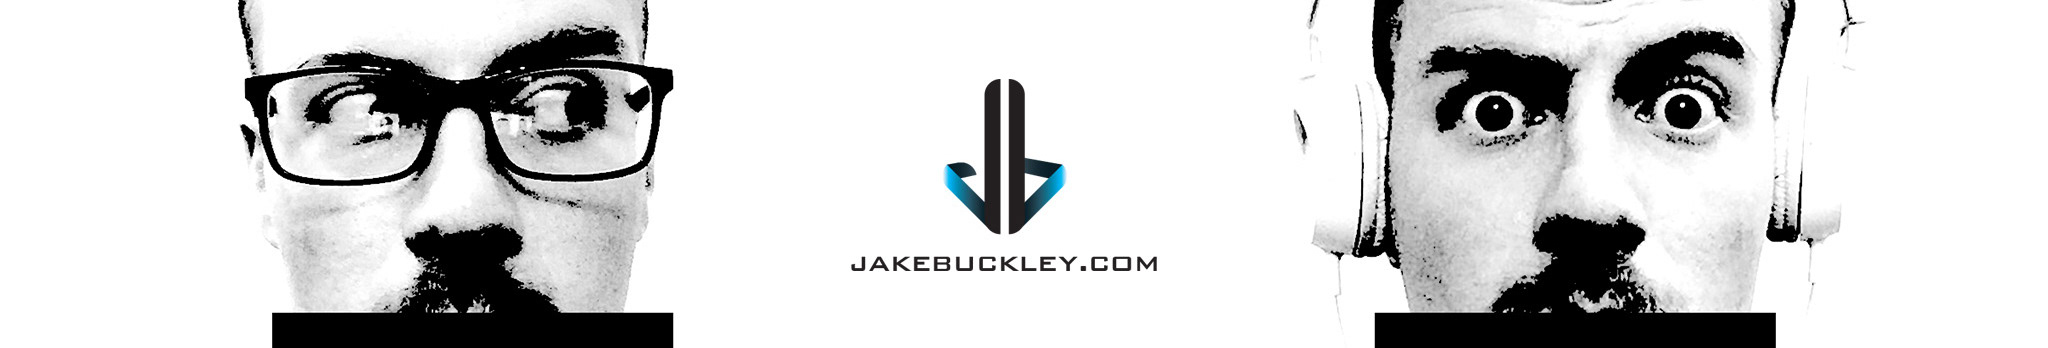 Jake Buckley's profile banner